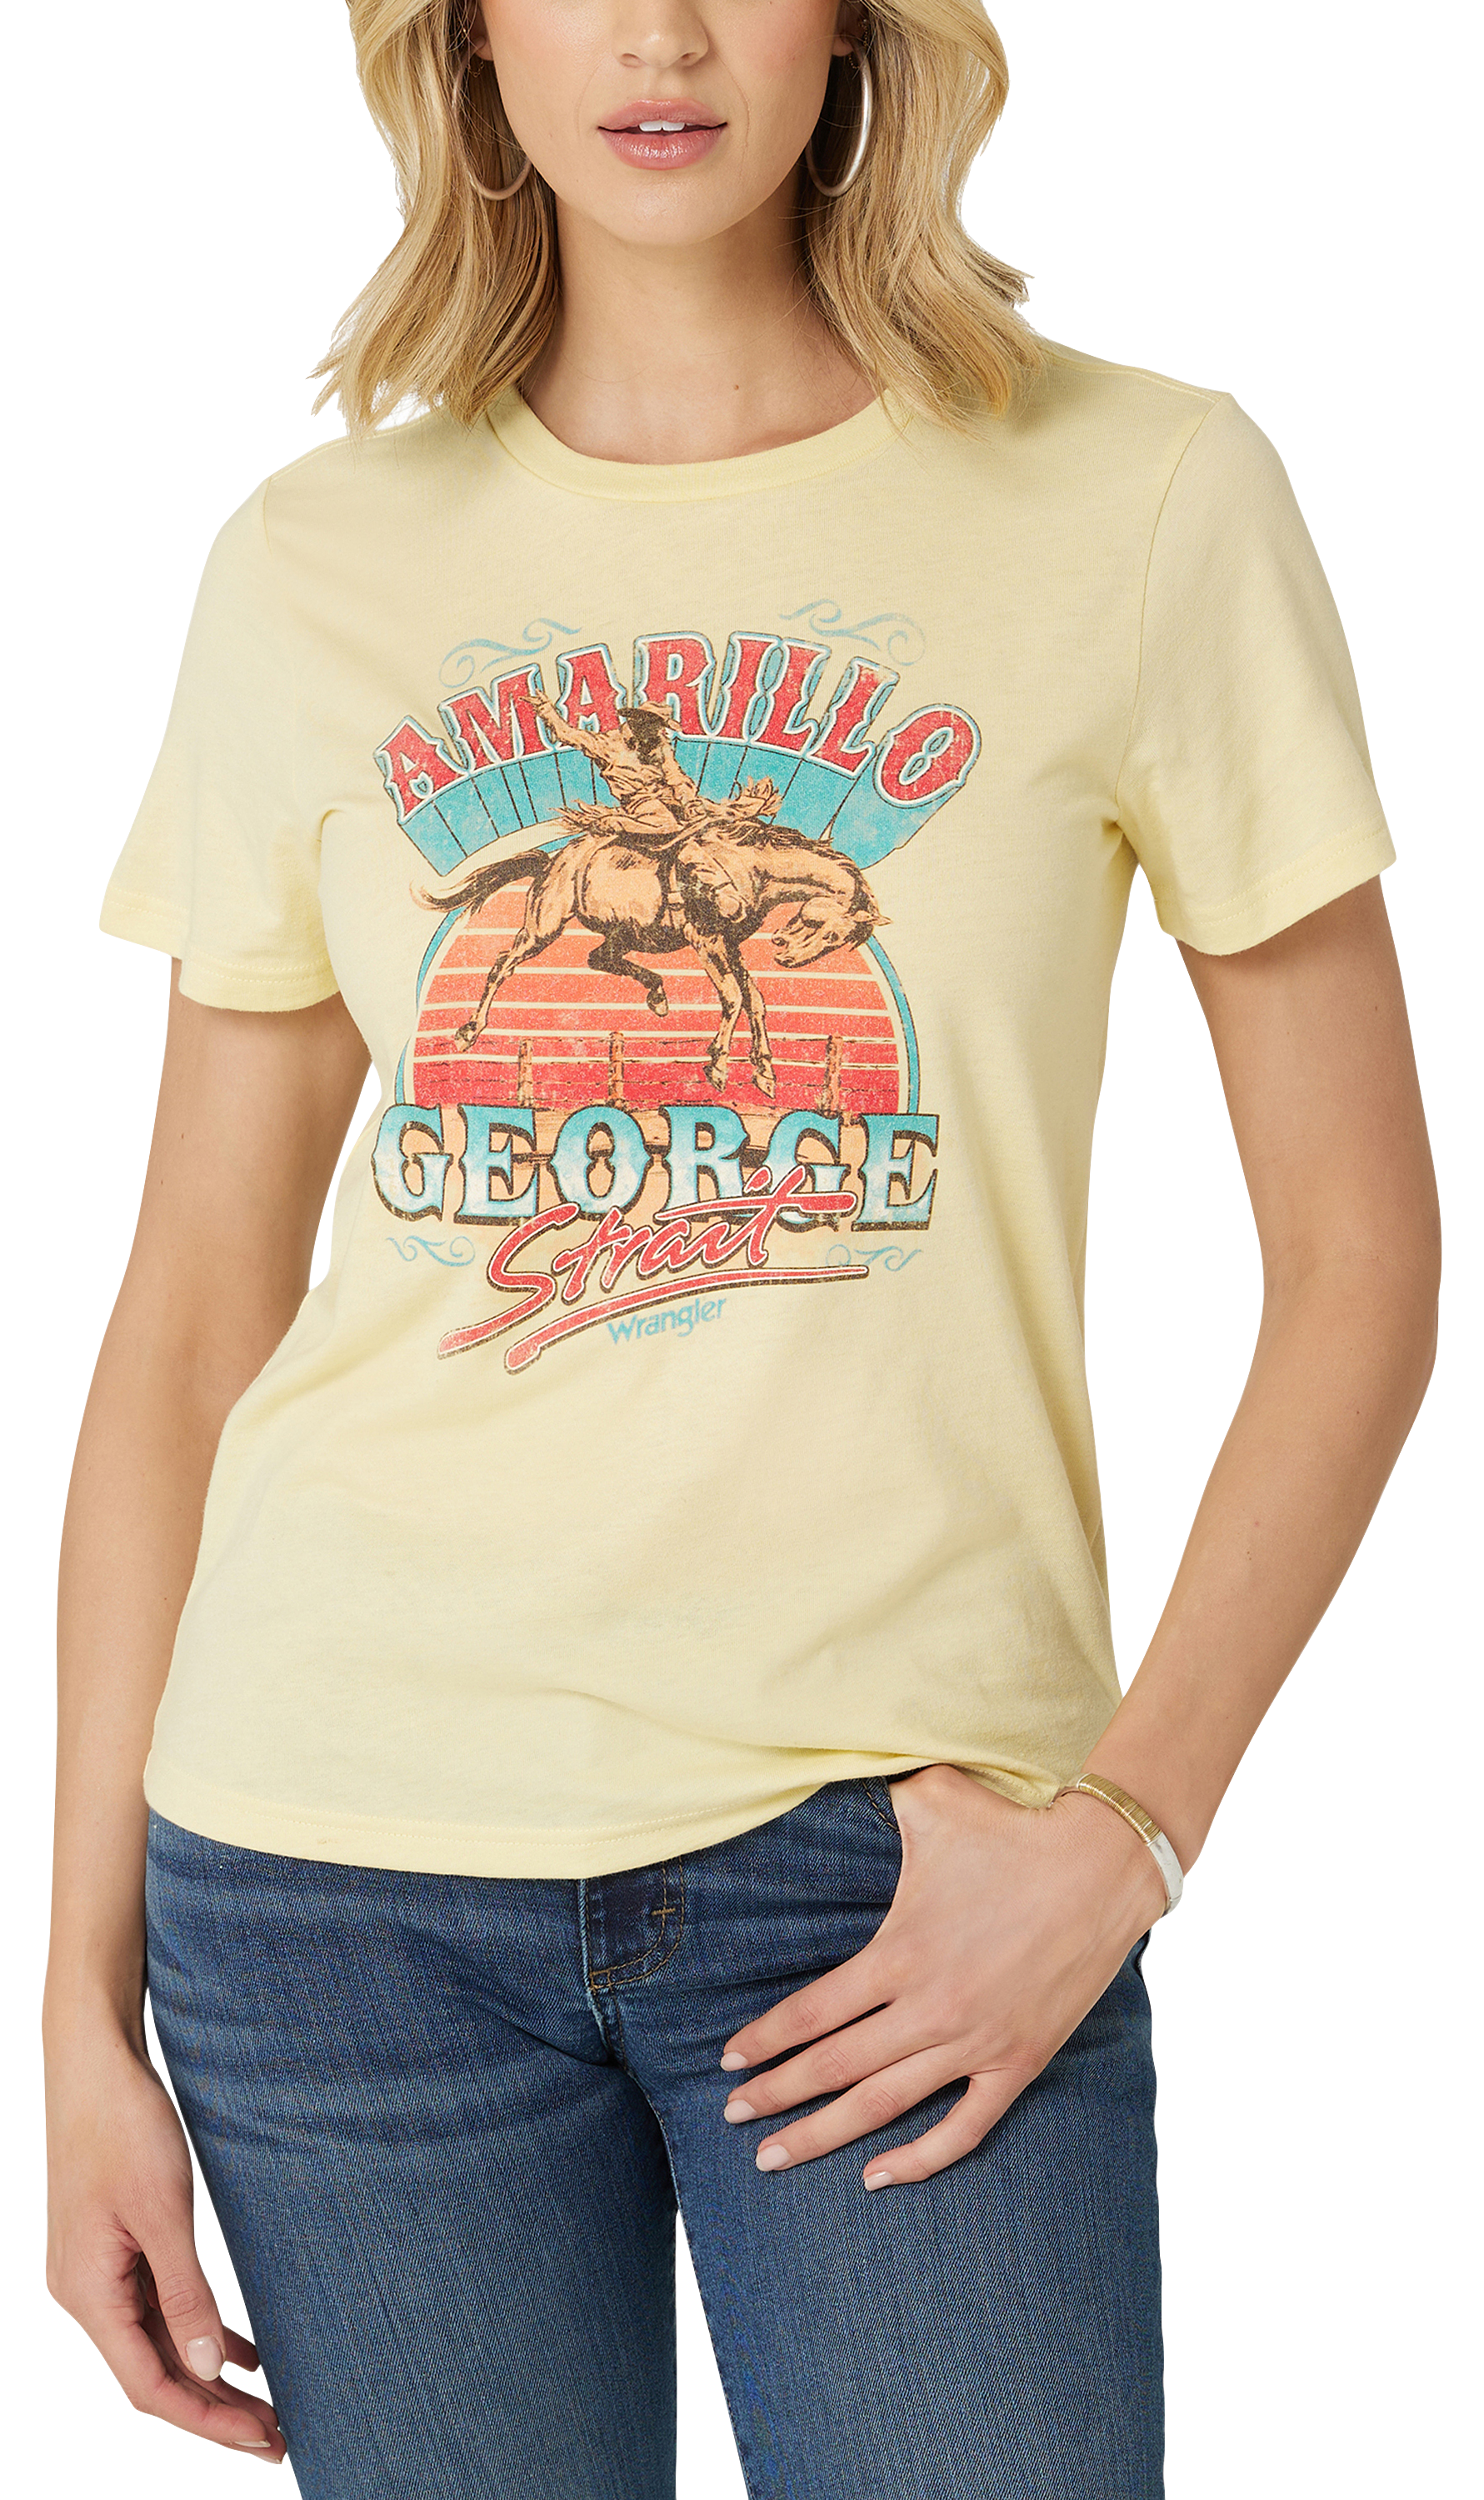 Wrangler Retro Amarillo George Strait Graphic Short-Sleeve T-Shirt for Ladies - Mellow Yellow Heather - L